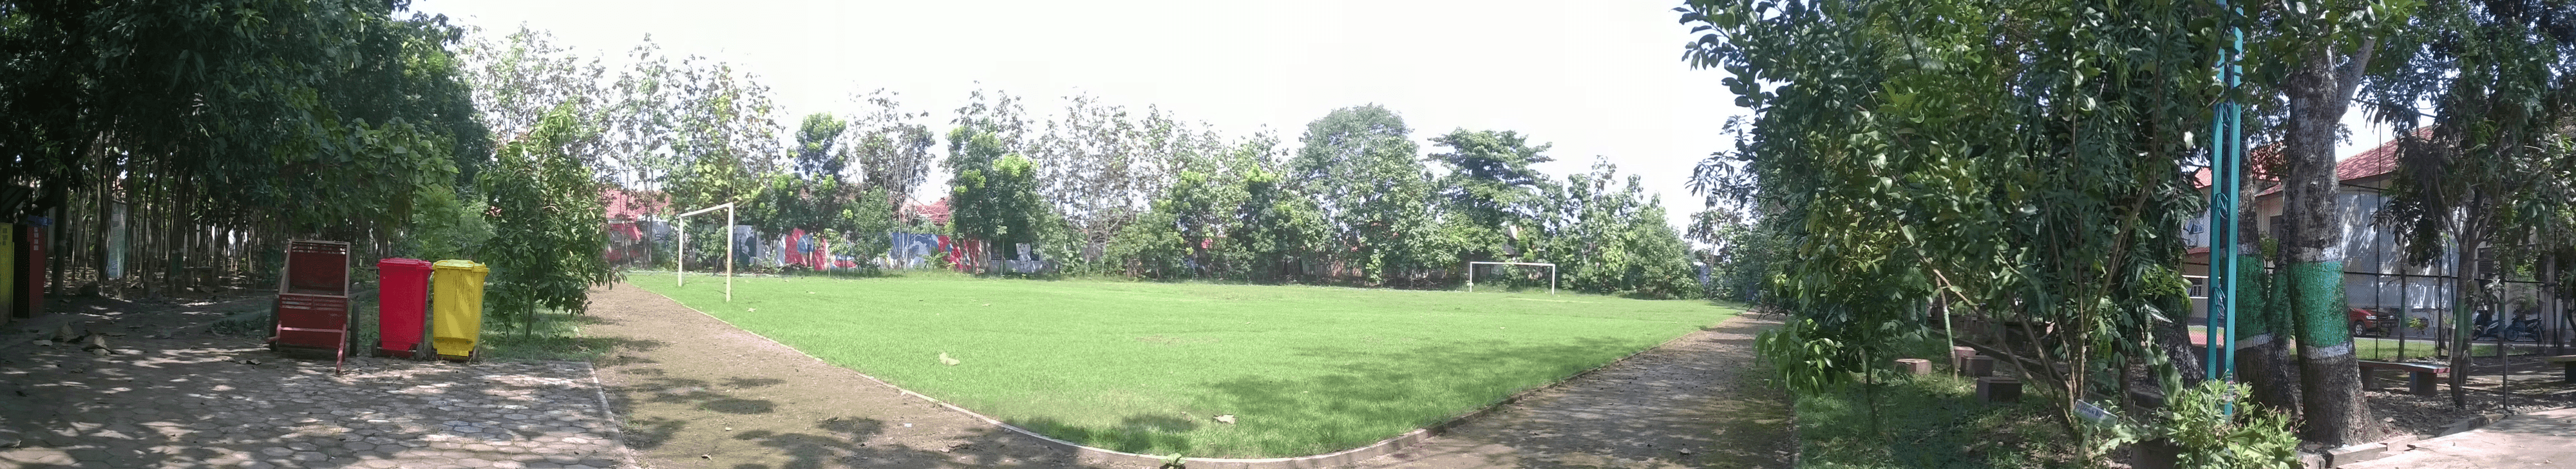 Football Field Panoramic